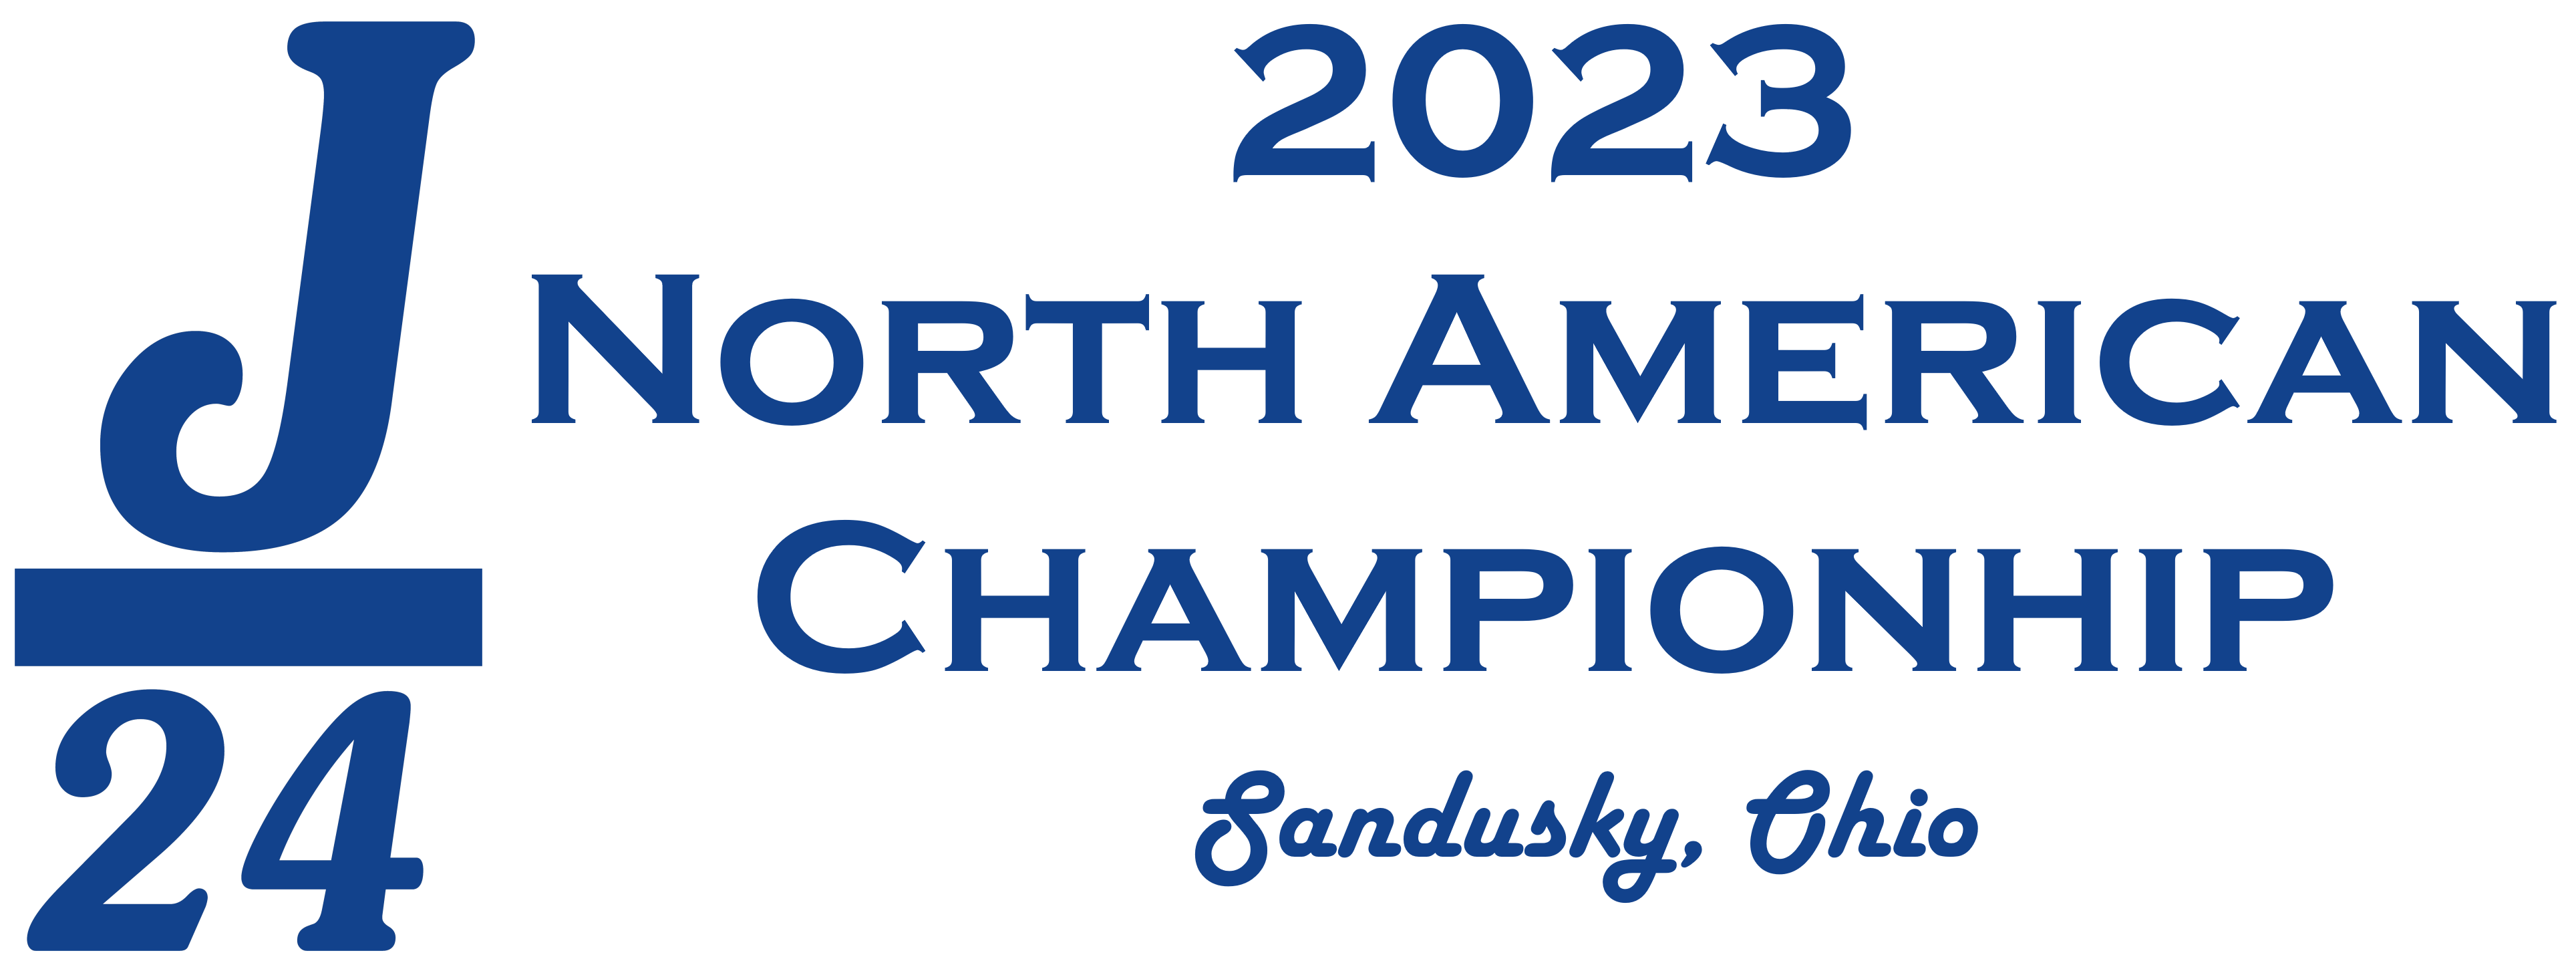 schedule-2023-j24-north-american-championship